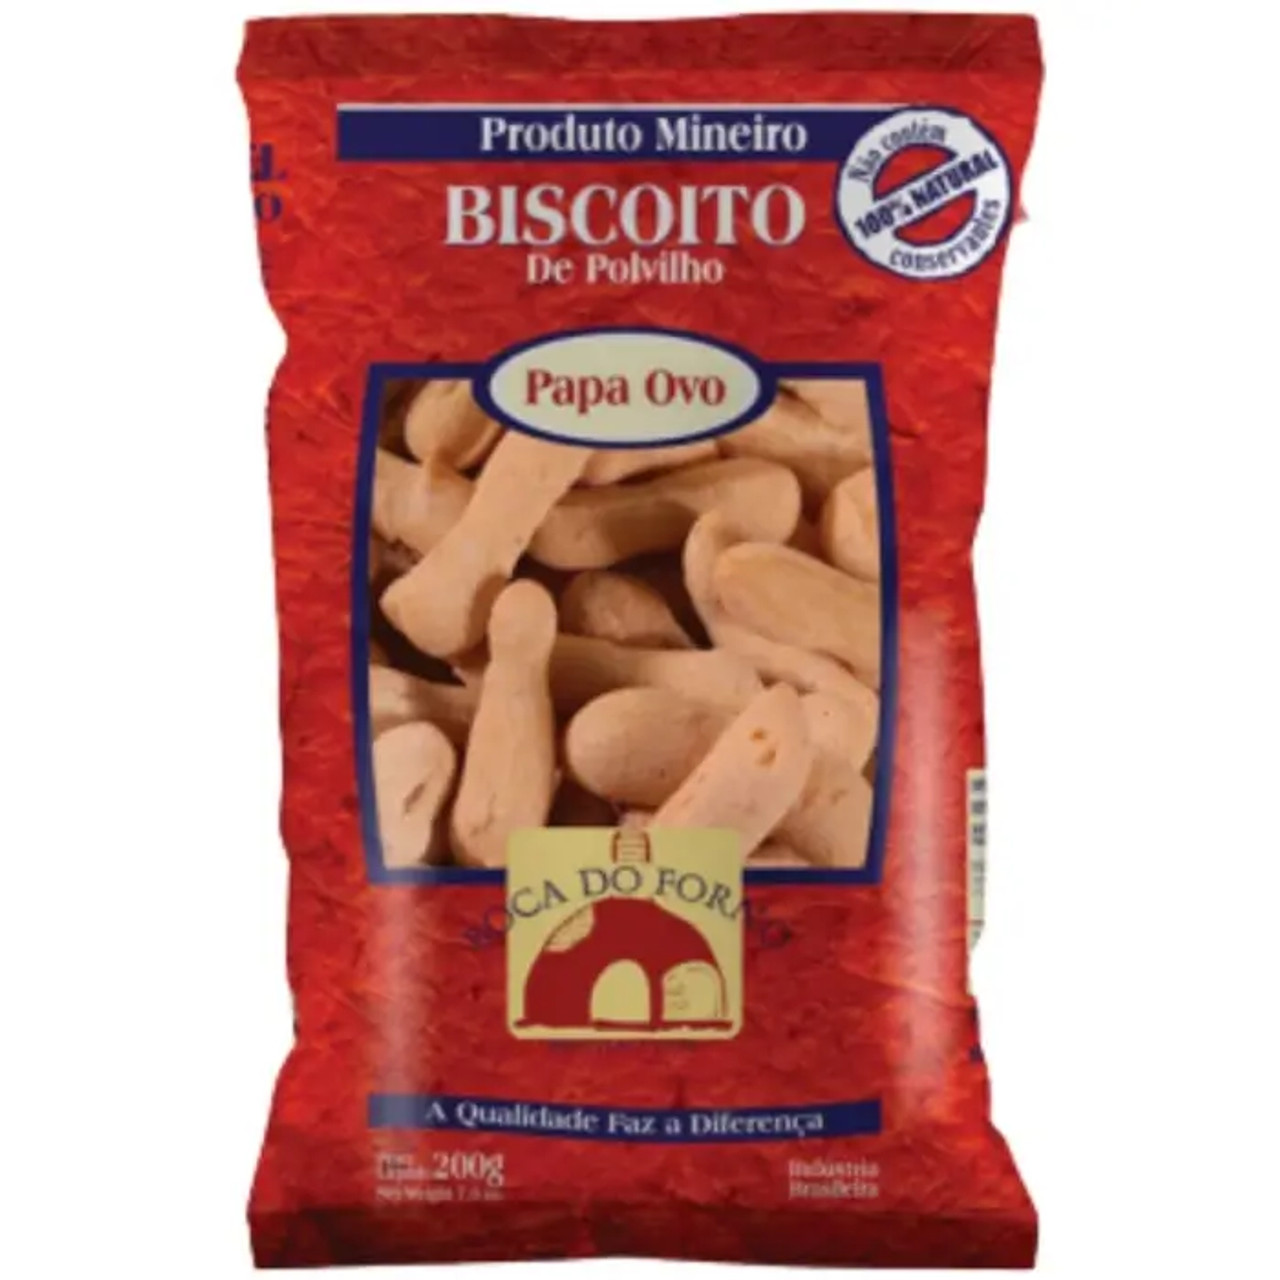 Boca do Forno Tapioca Chips Beggiato - Cassava Flour Chips (20/Case) 200g - Chicken Pieces